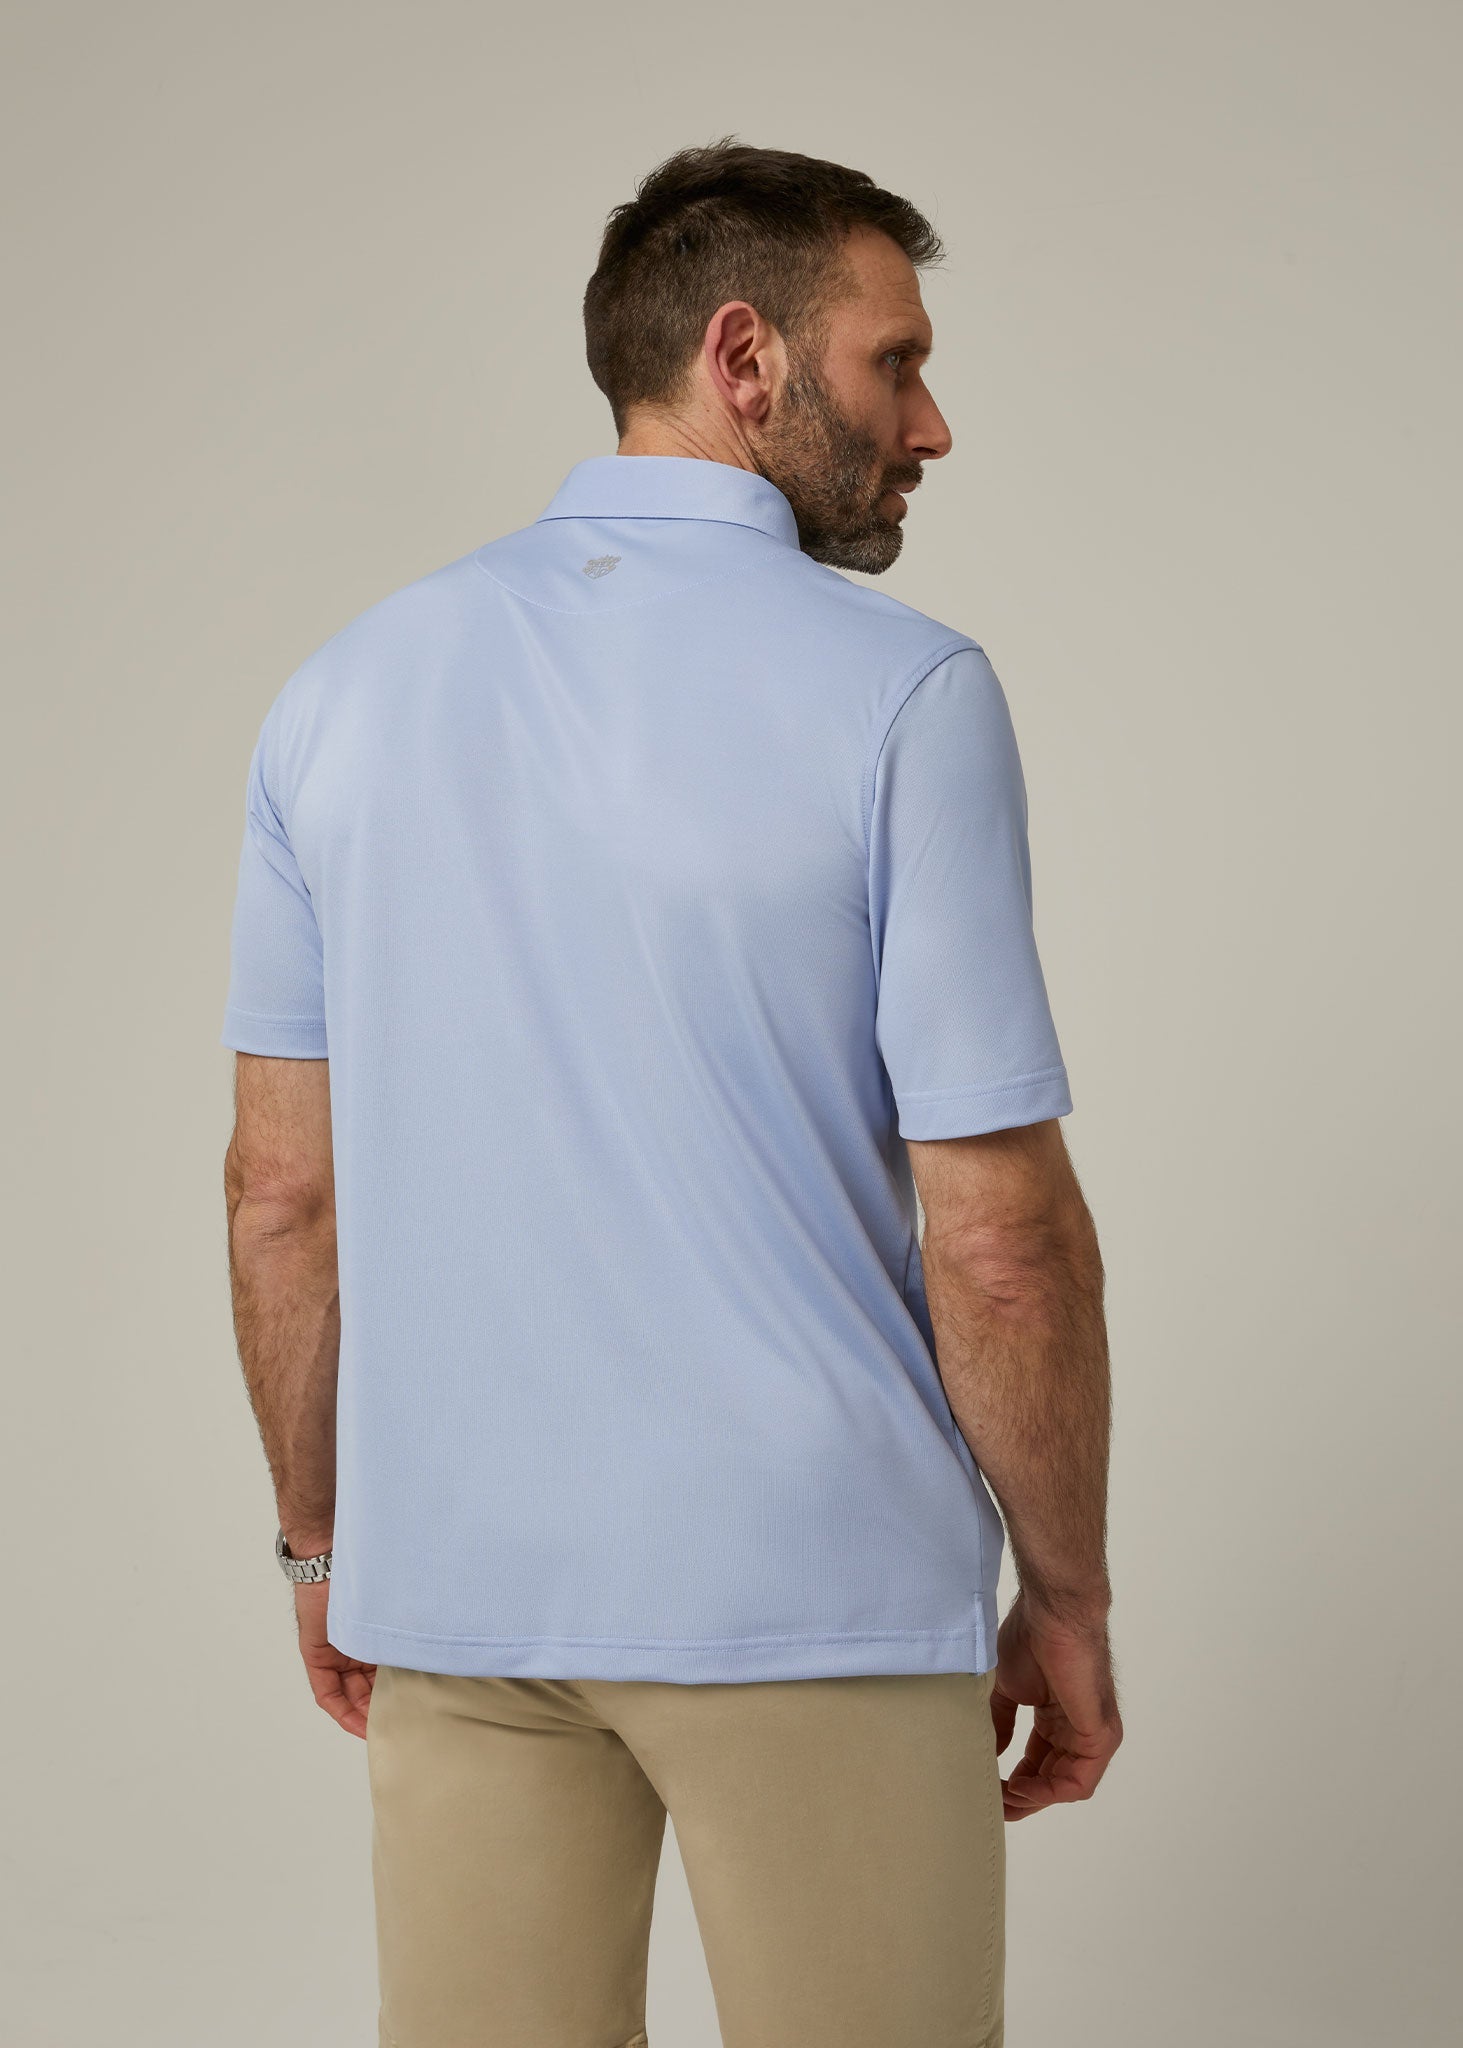 Men's 3 button polo shirt in light blue